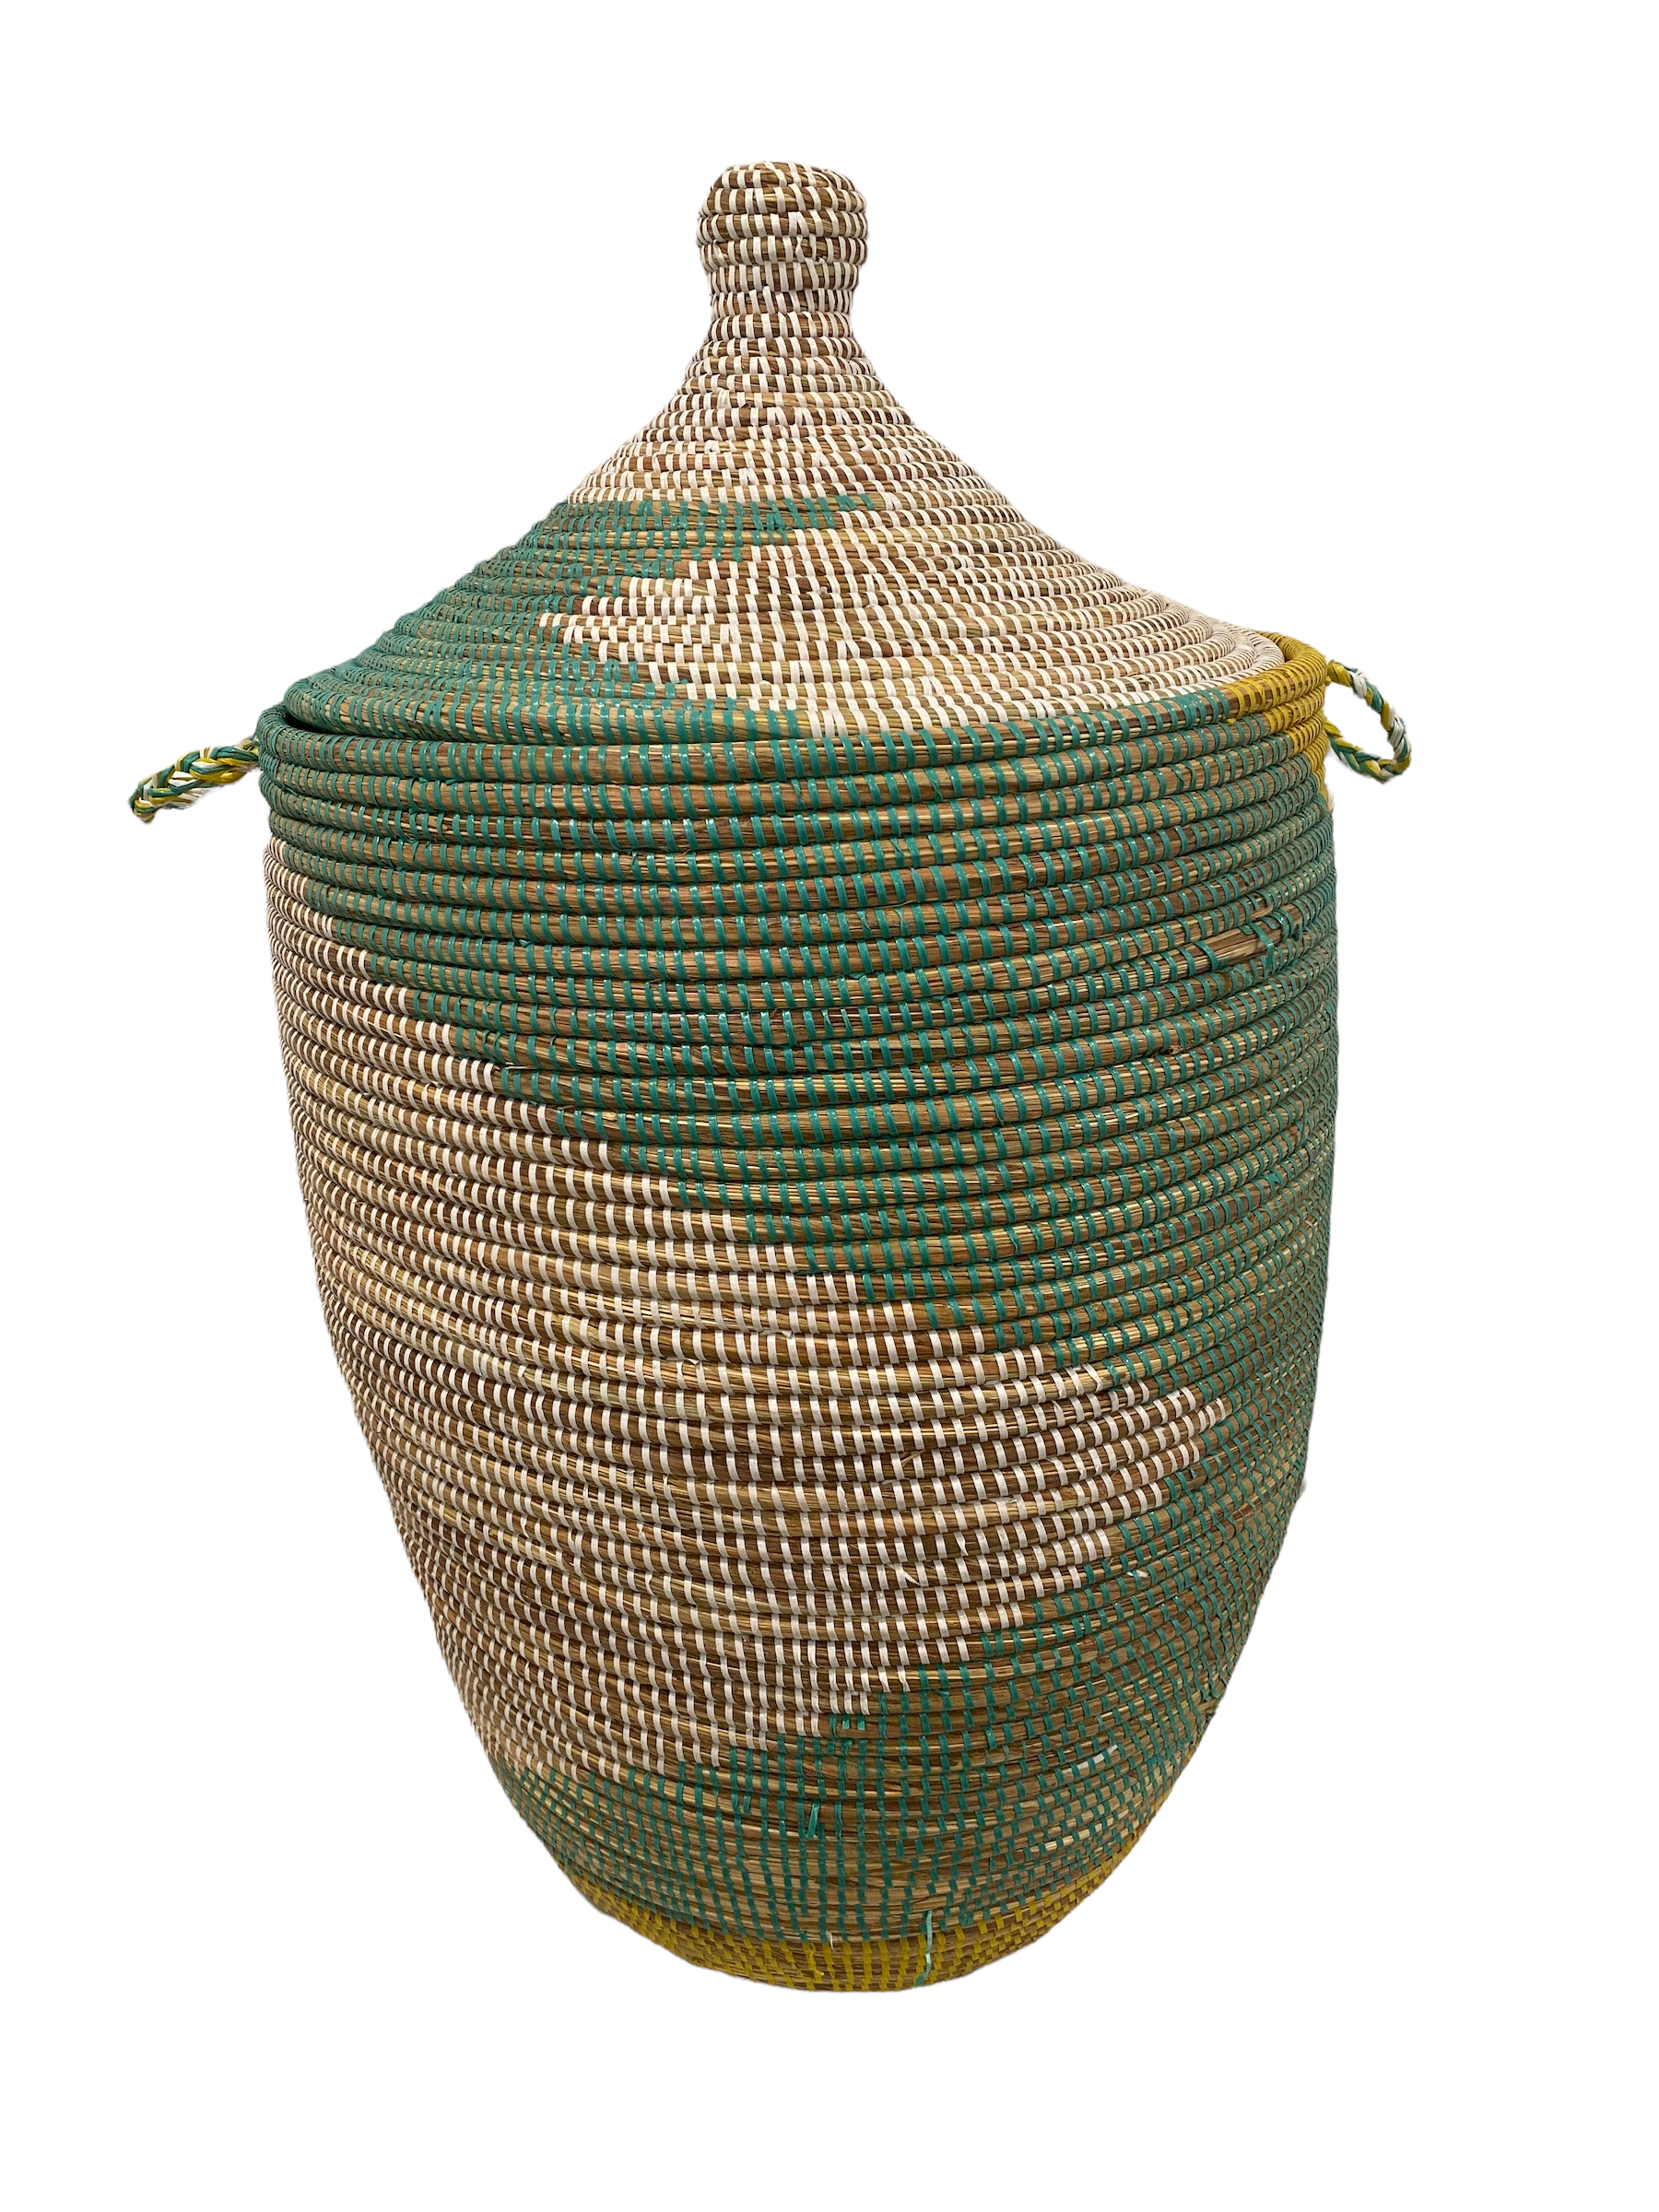 Senegal Laundry Basket - (88A.1)